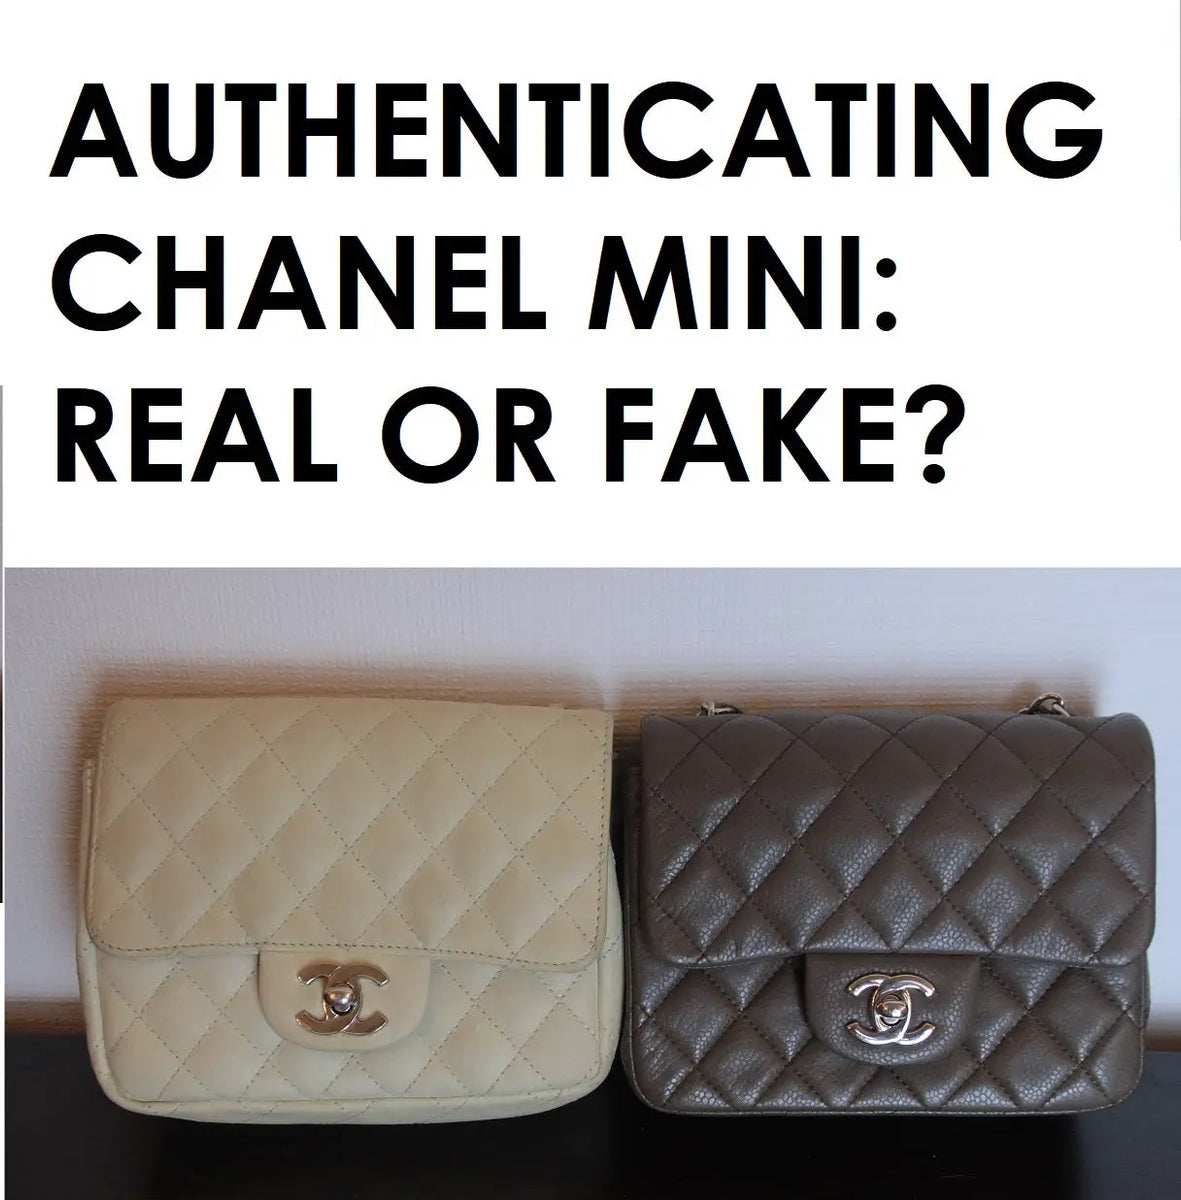 Chanel - Authenticated Chanel 22 Handbag - Denim - Jeans Blue Plain for Women, Very Good Condition